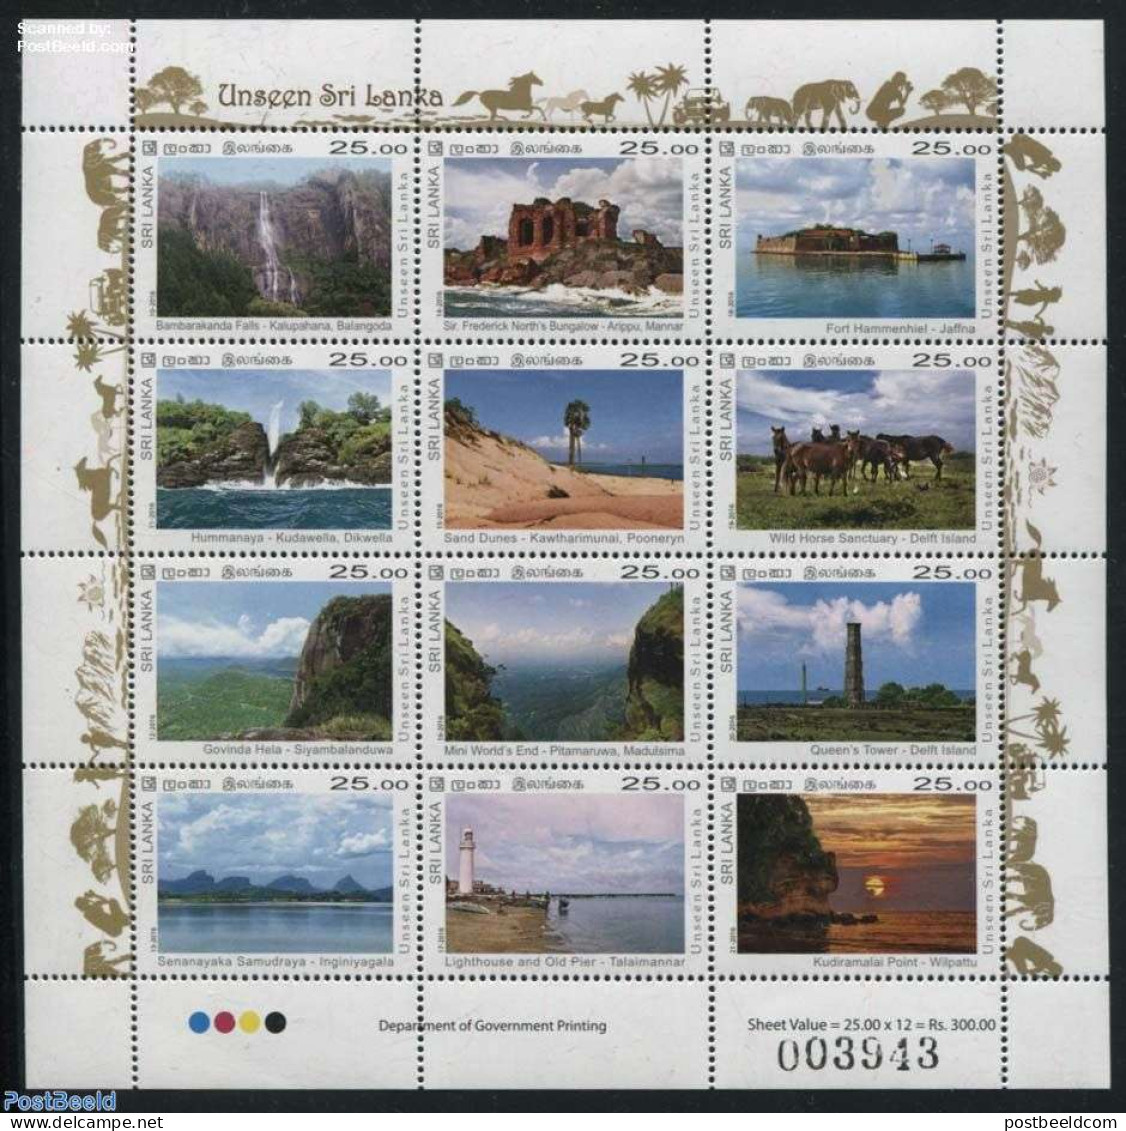 Sri Lanka (Ceylon) 2016 Unseen Sri Lanka 12v M/s, Mint NH, Nature - Various - Horses - Water, Dams & Falls - Lighthous.. - Lighthouses